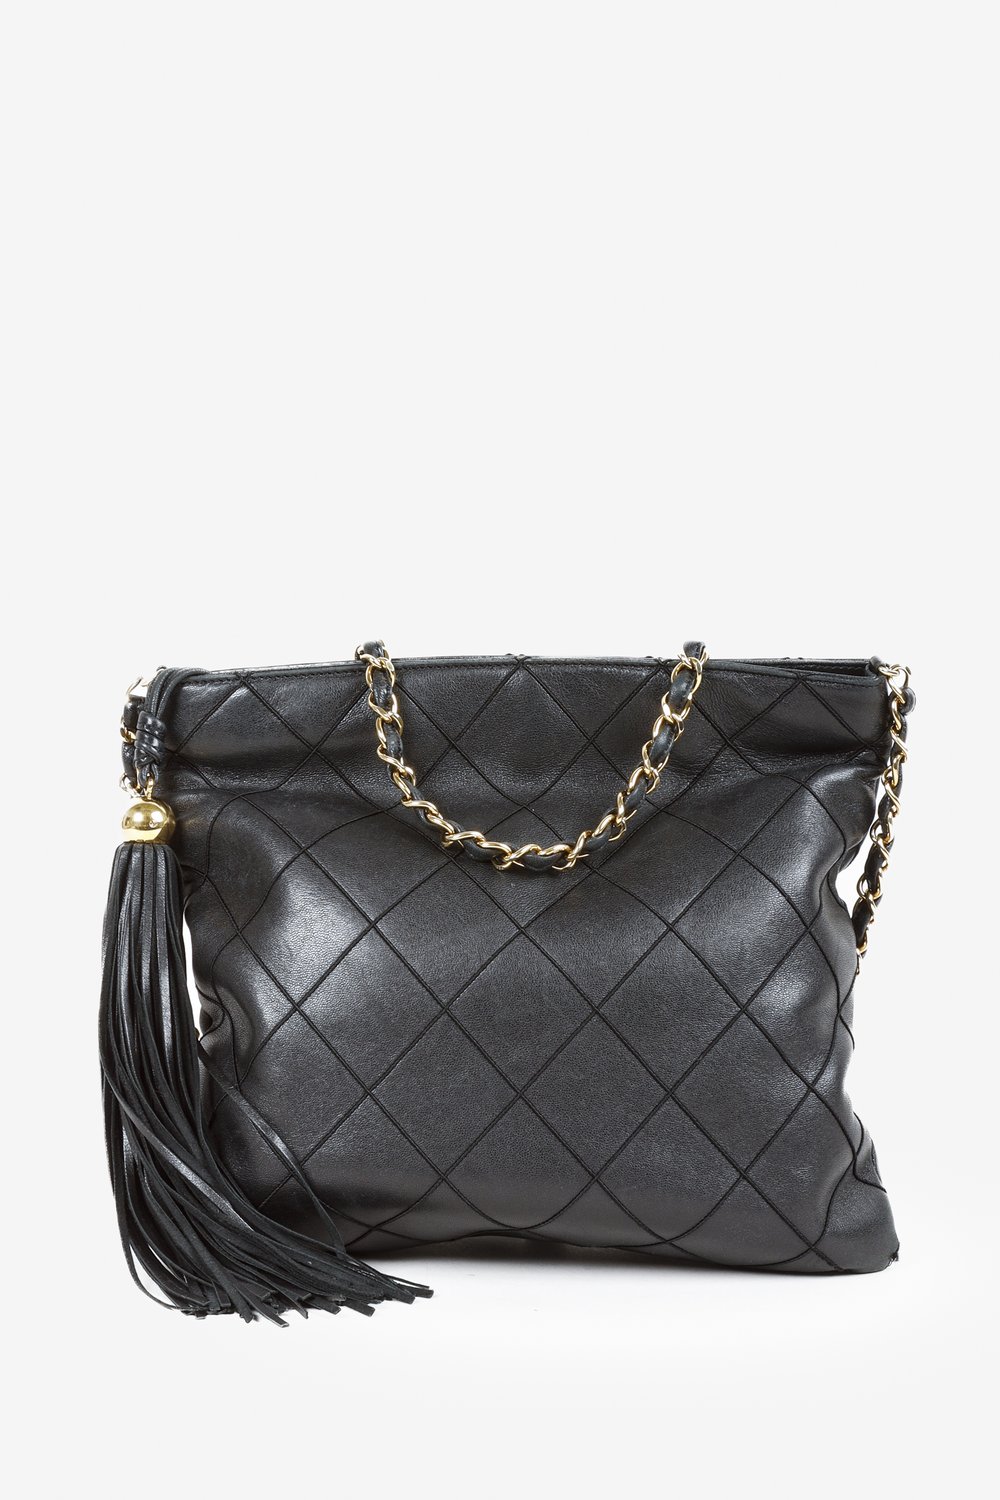 Chanel Vintage Chain Tassel Black Lambskin Crossbody Bag